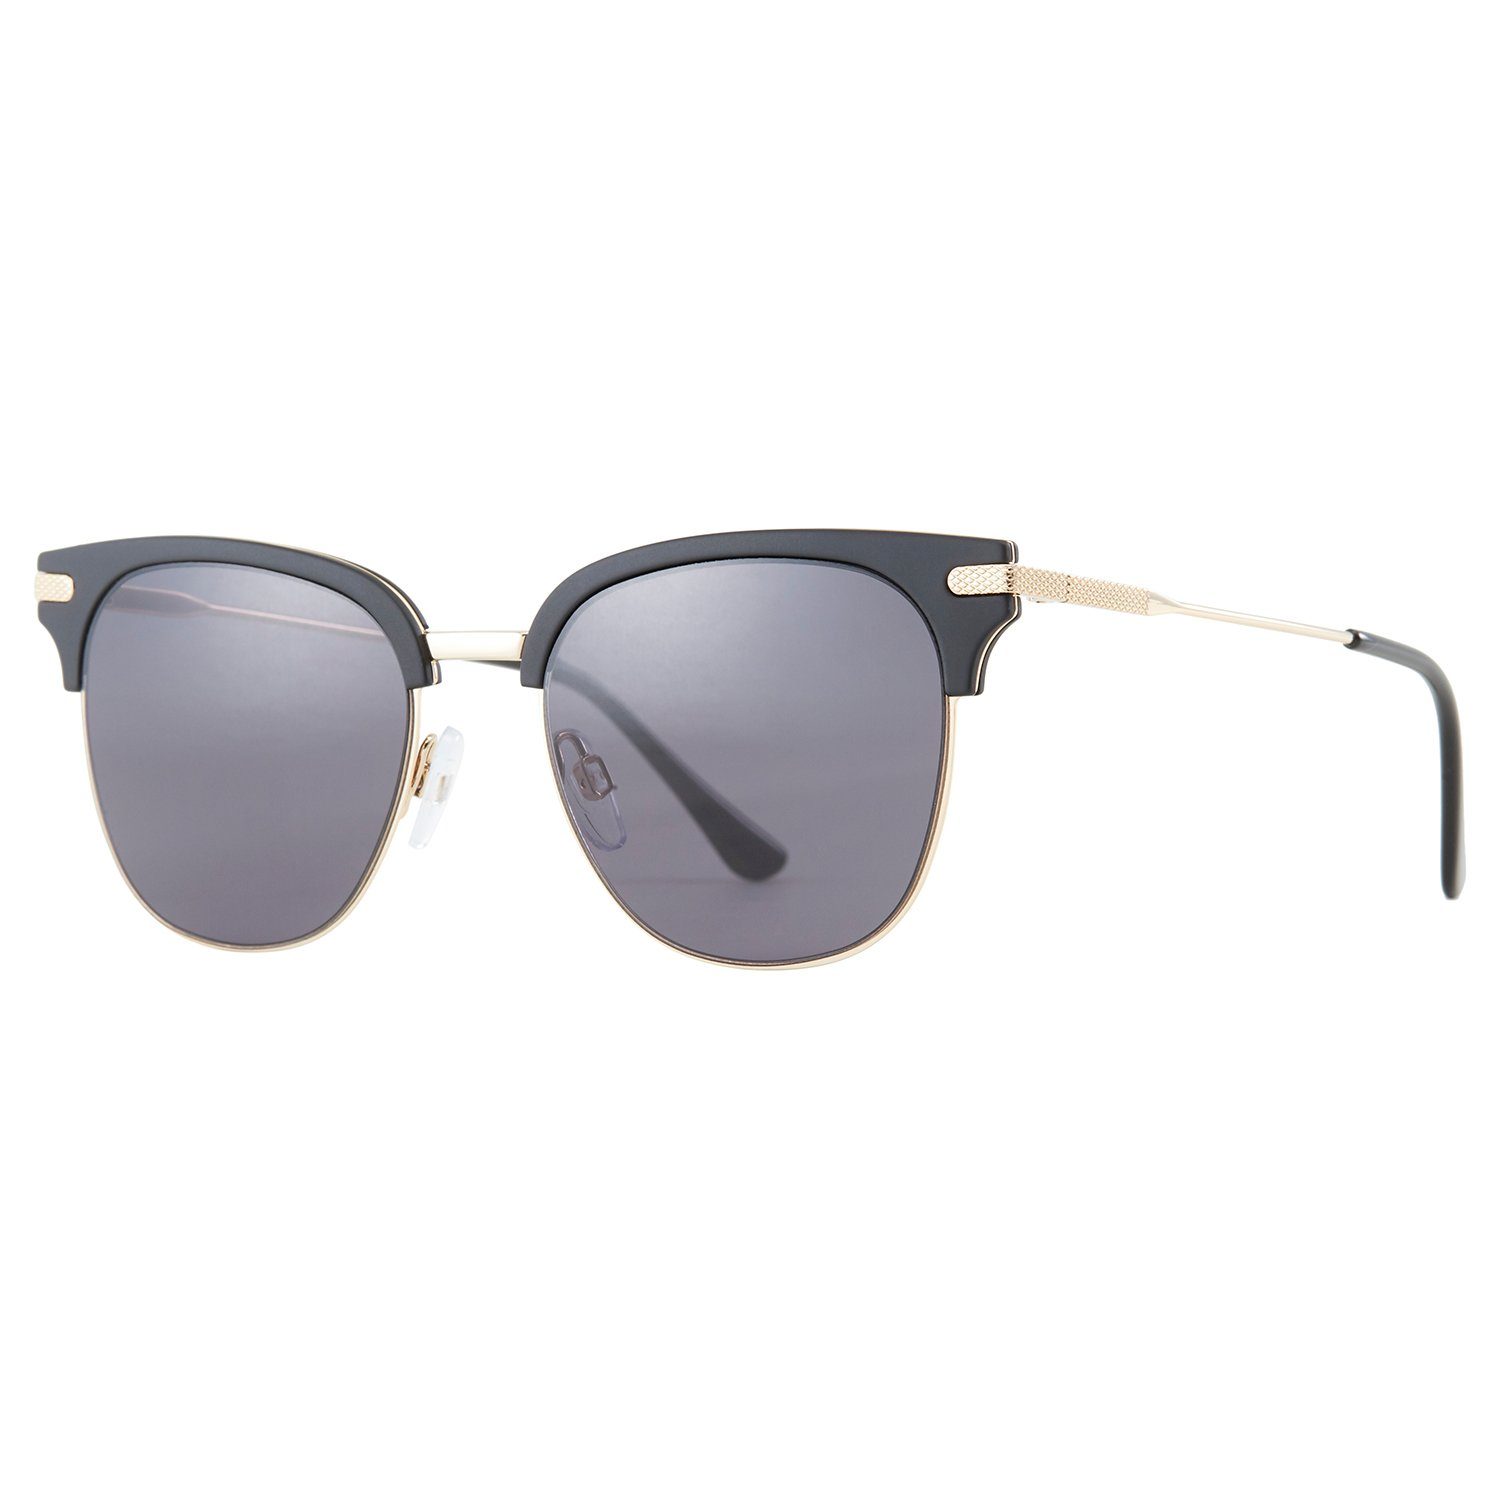 Moderne Damen Sonnenbrille 2 Farben Top Design UV400 Sunglases 